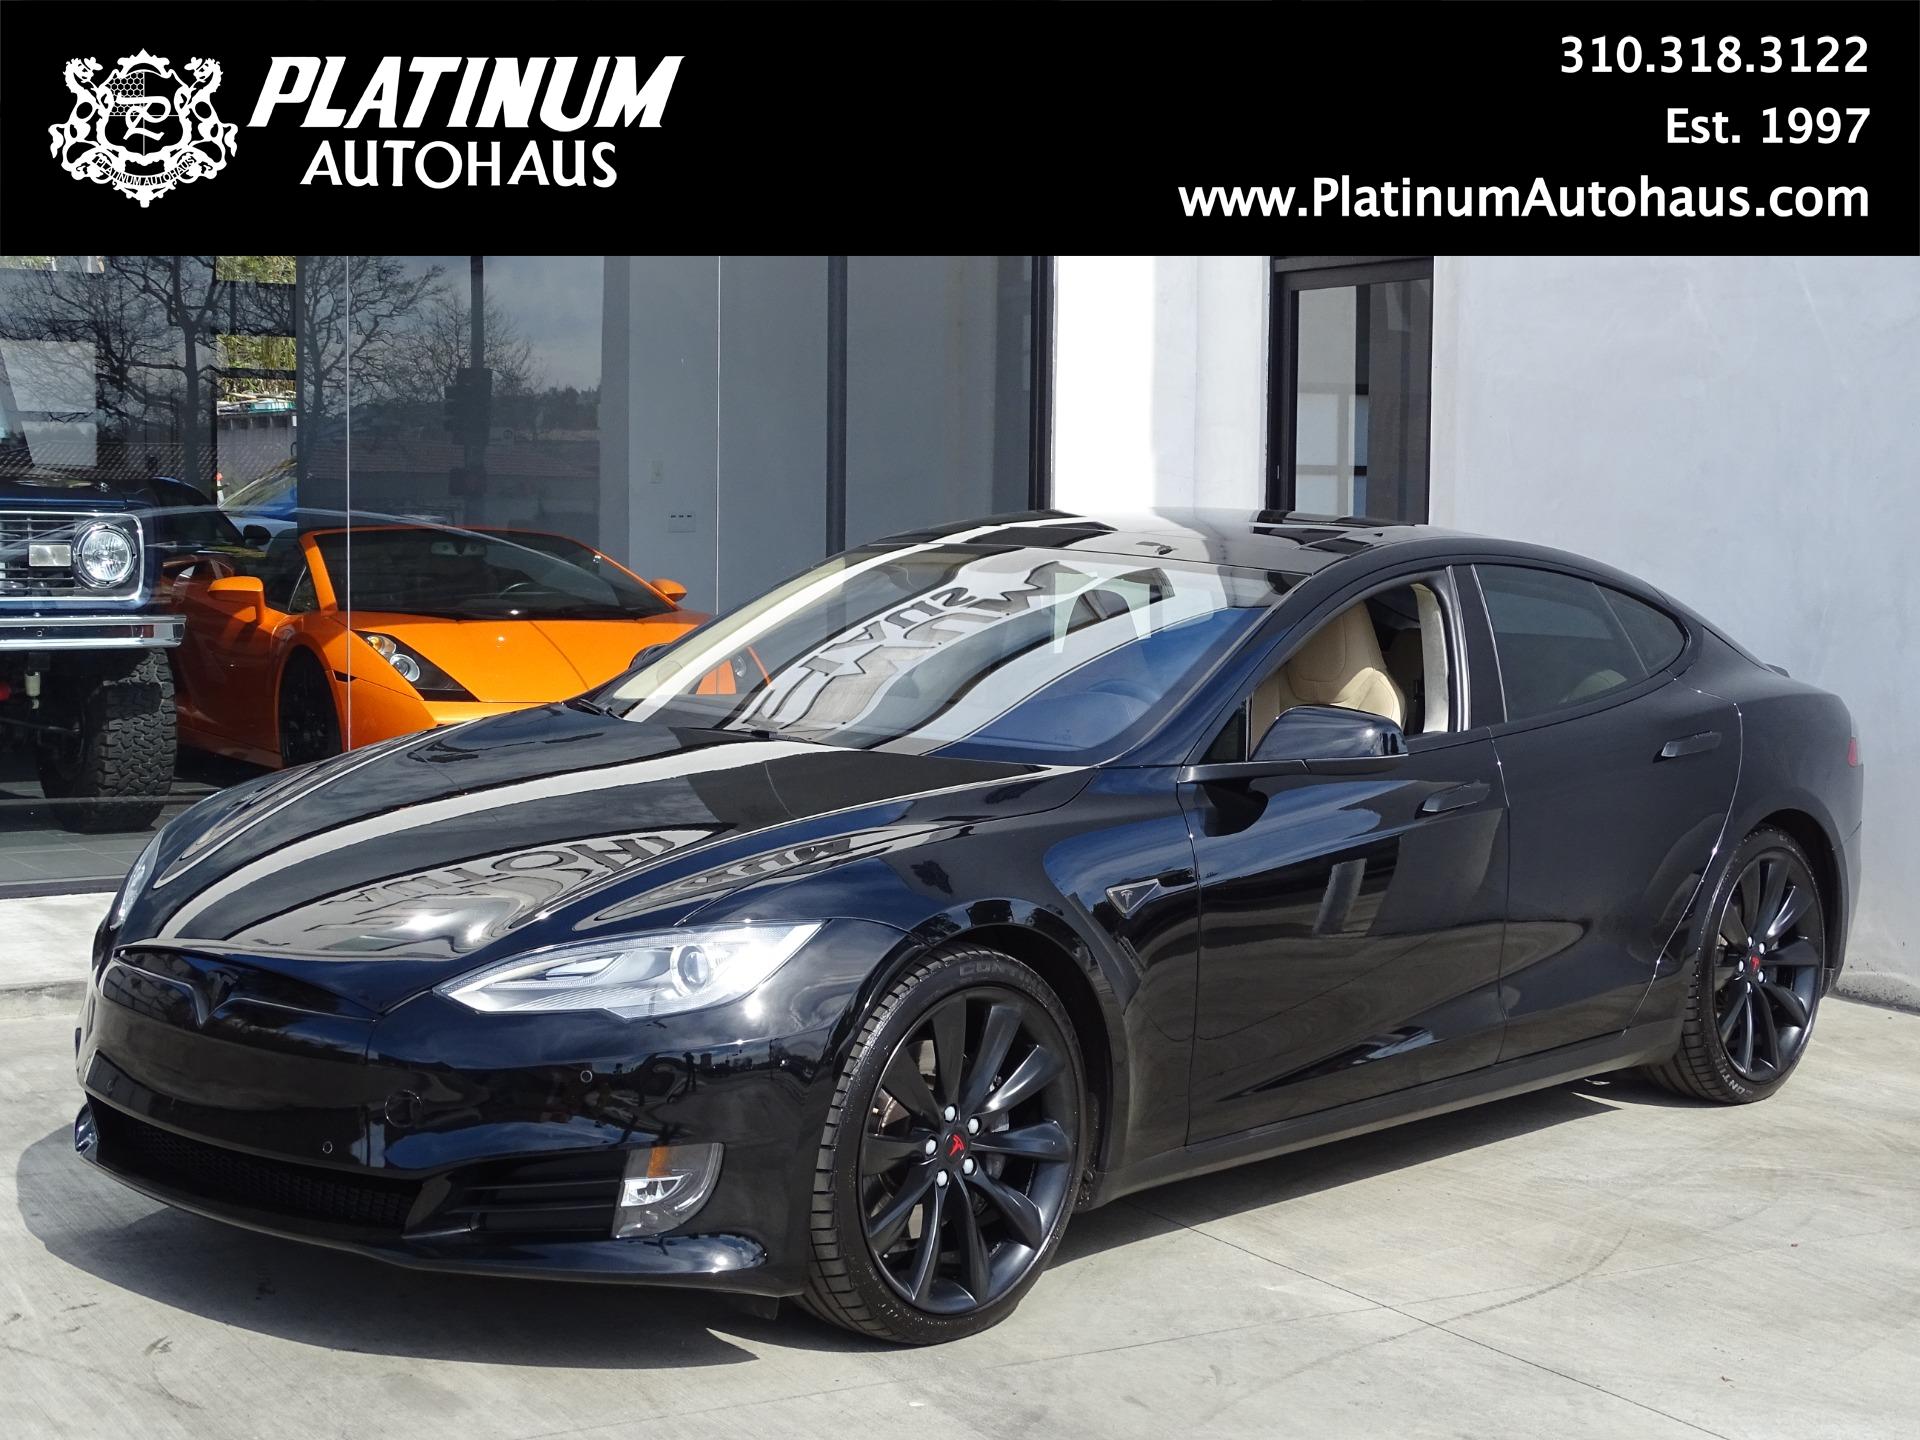 2013 Tesla Model S Performance P85 Stock 6144 For